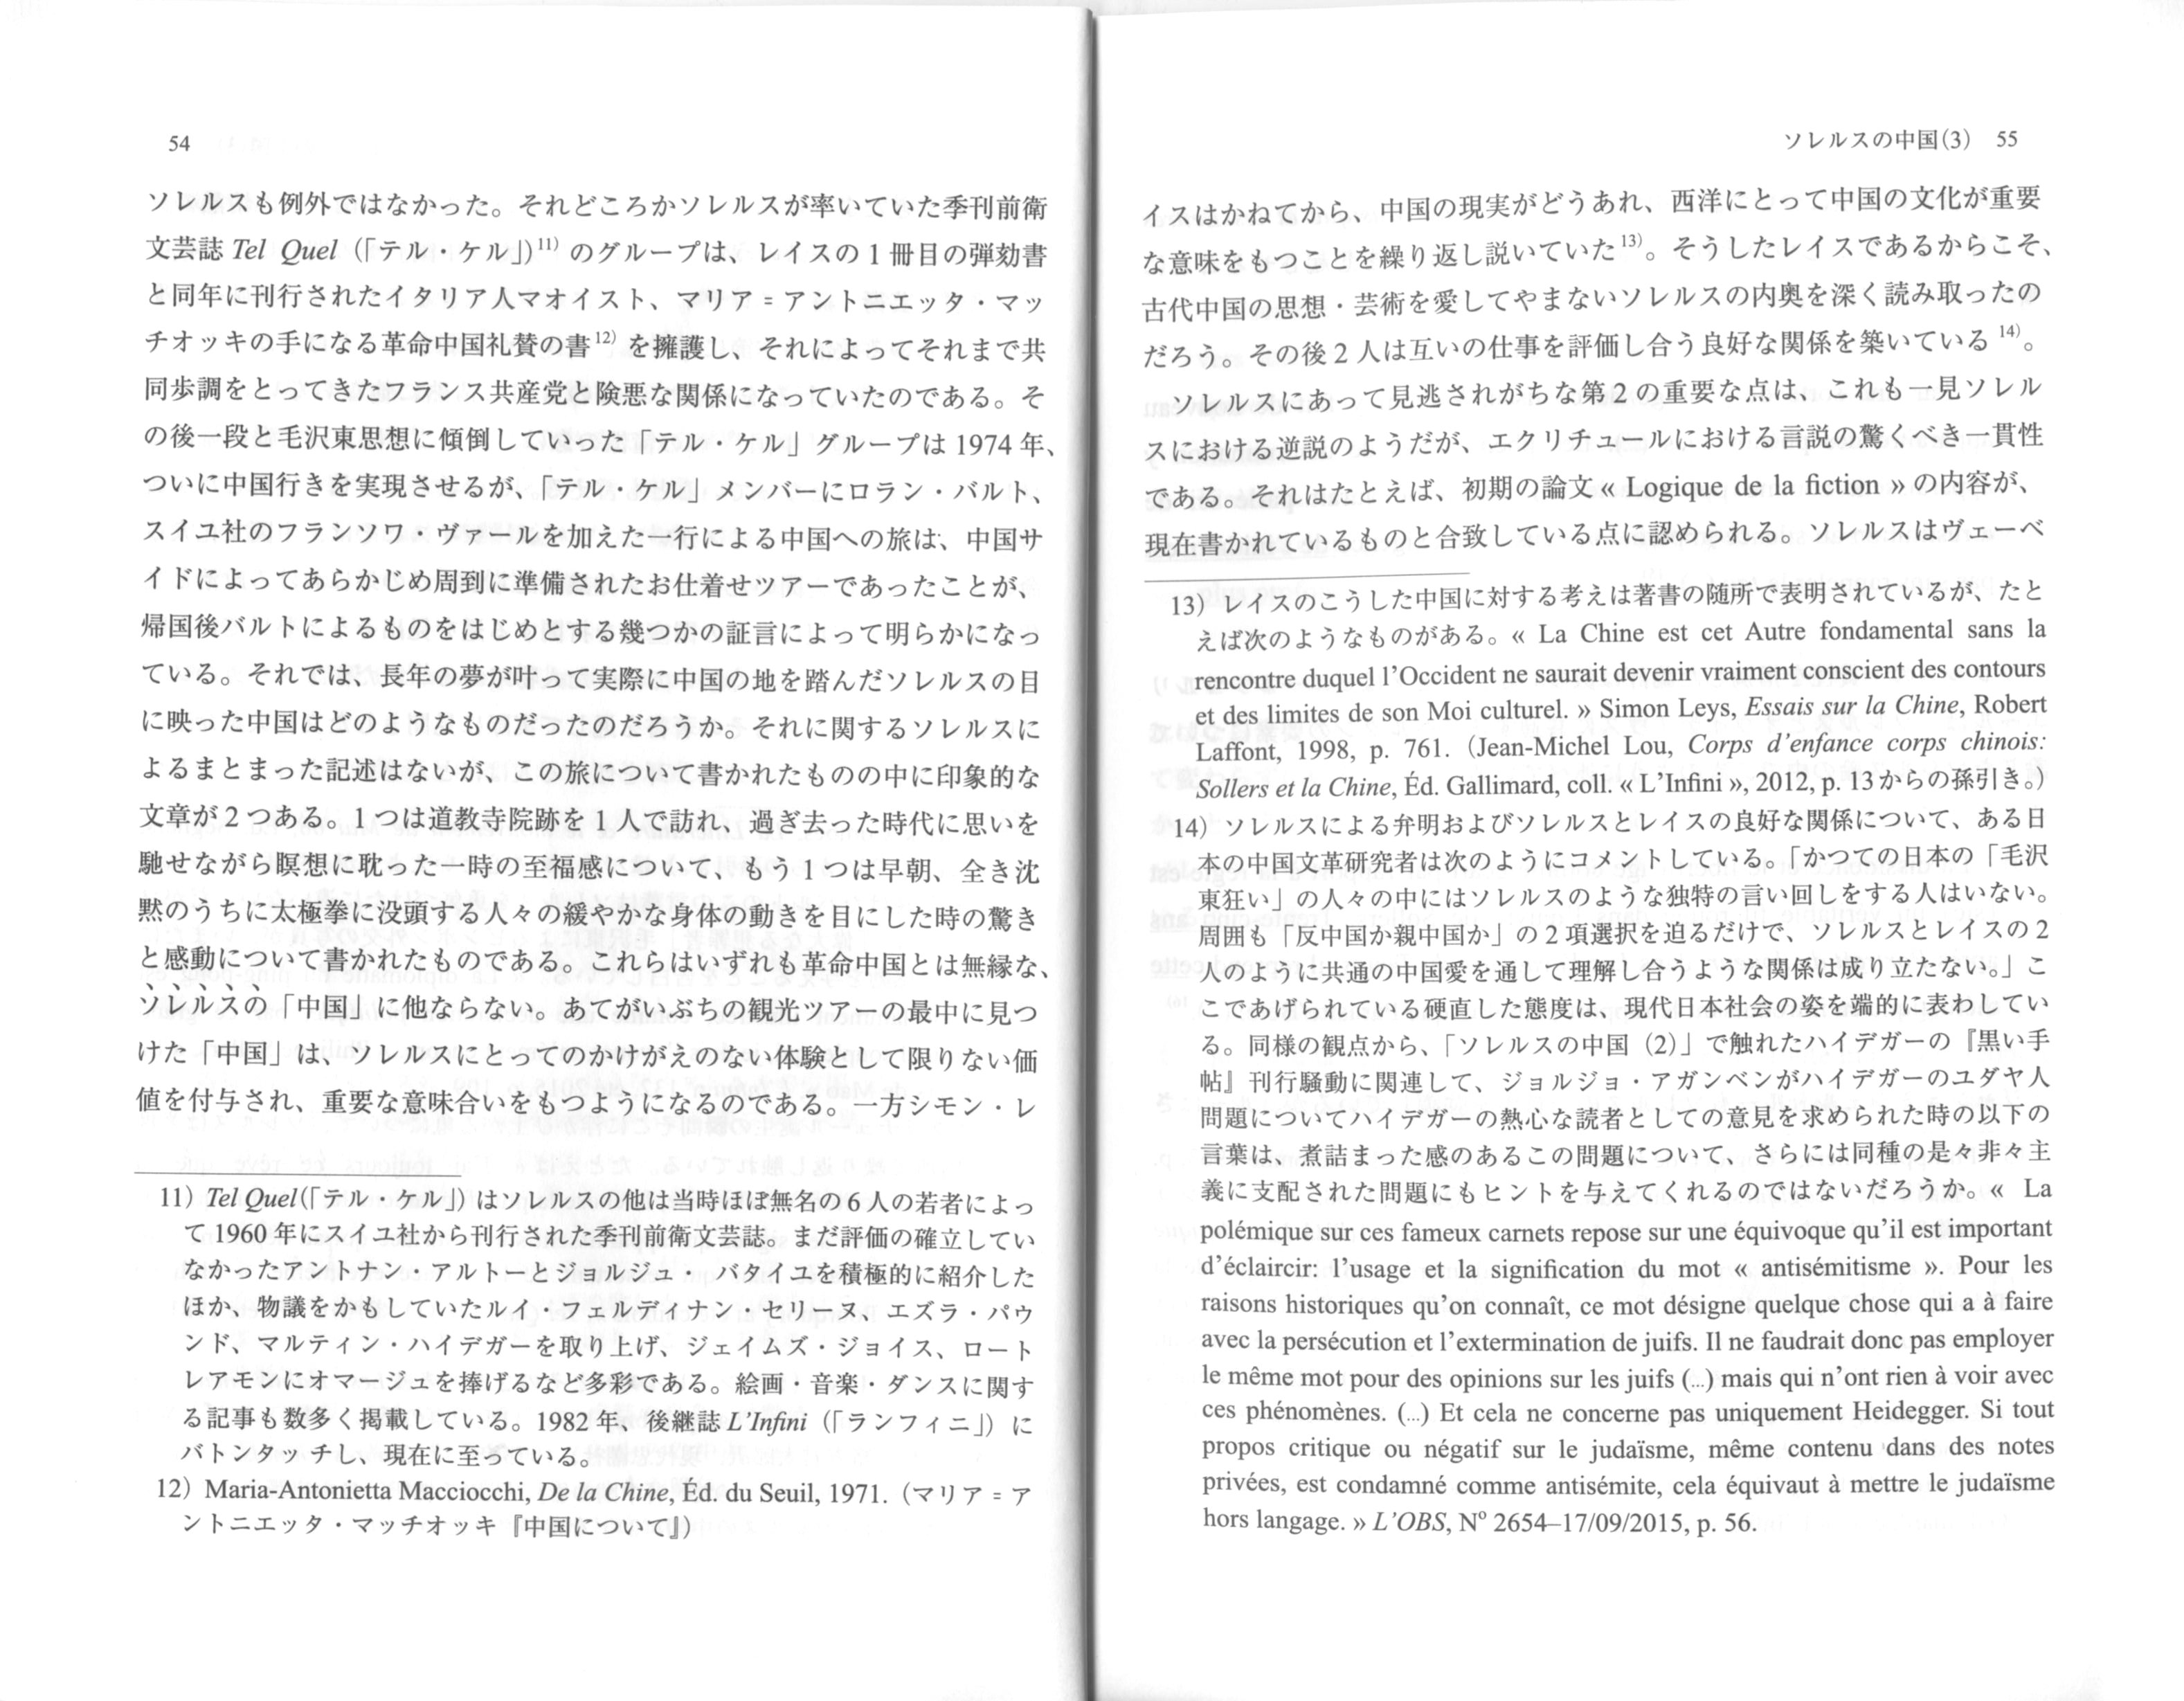 La Chine sollersienne, par Abe Shizuko, université KEIO, Yokohama, Japon  (extrait)